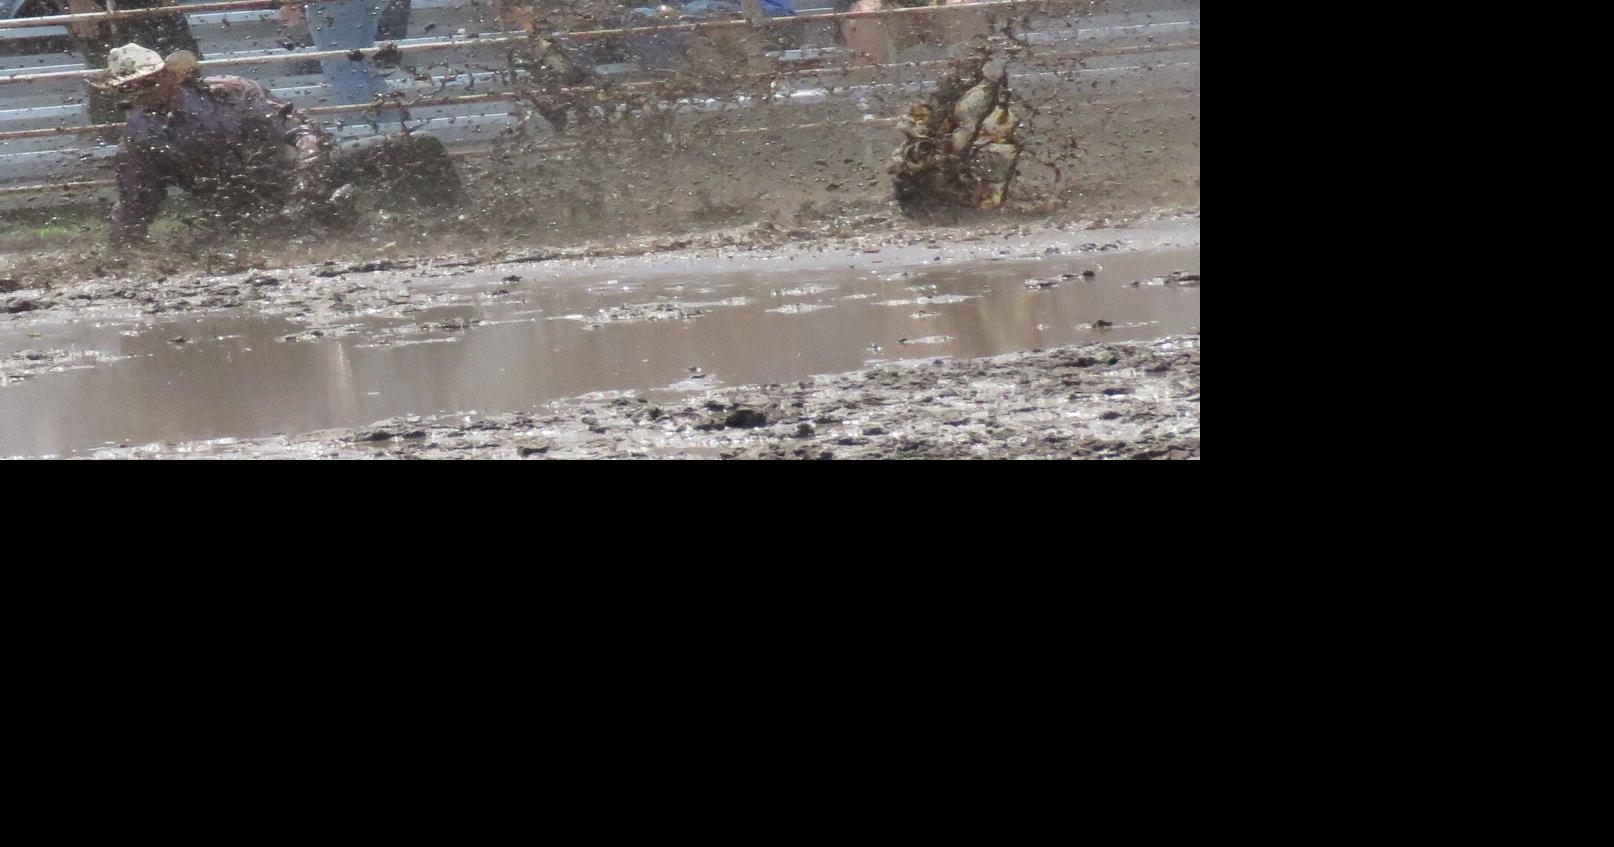 Mud wrestling at the Sumner rodeo